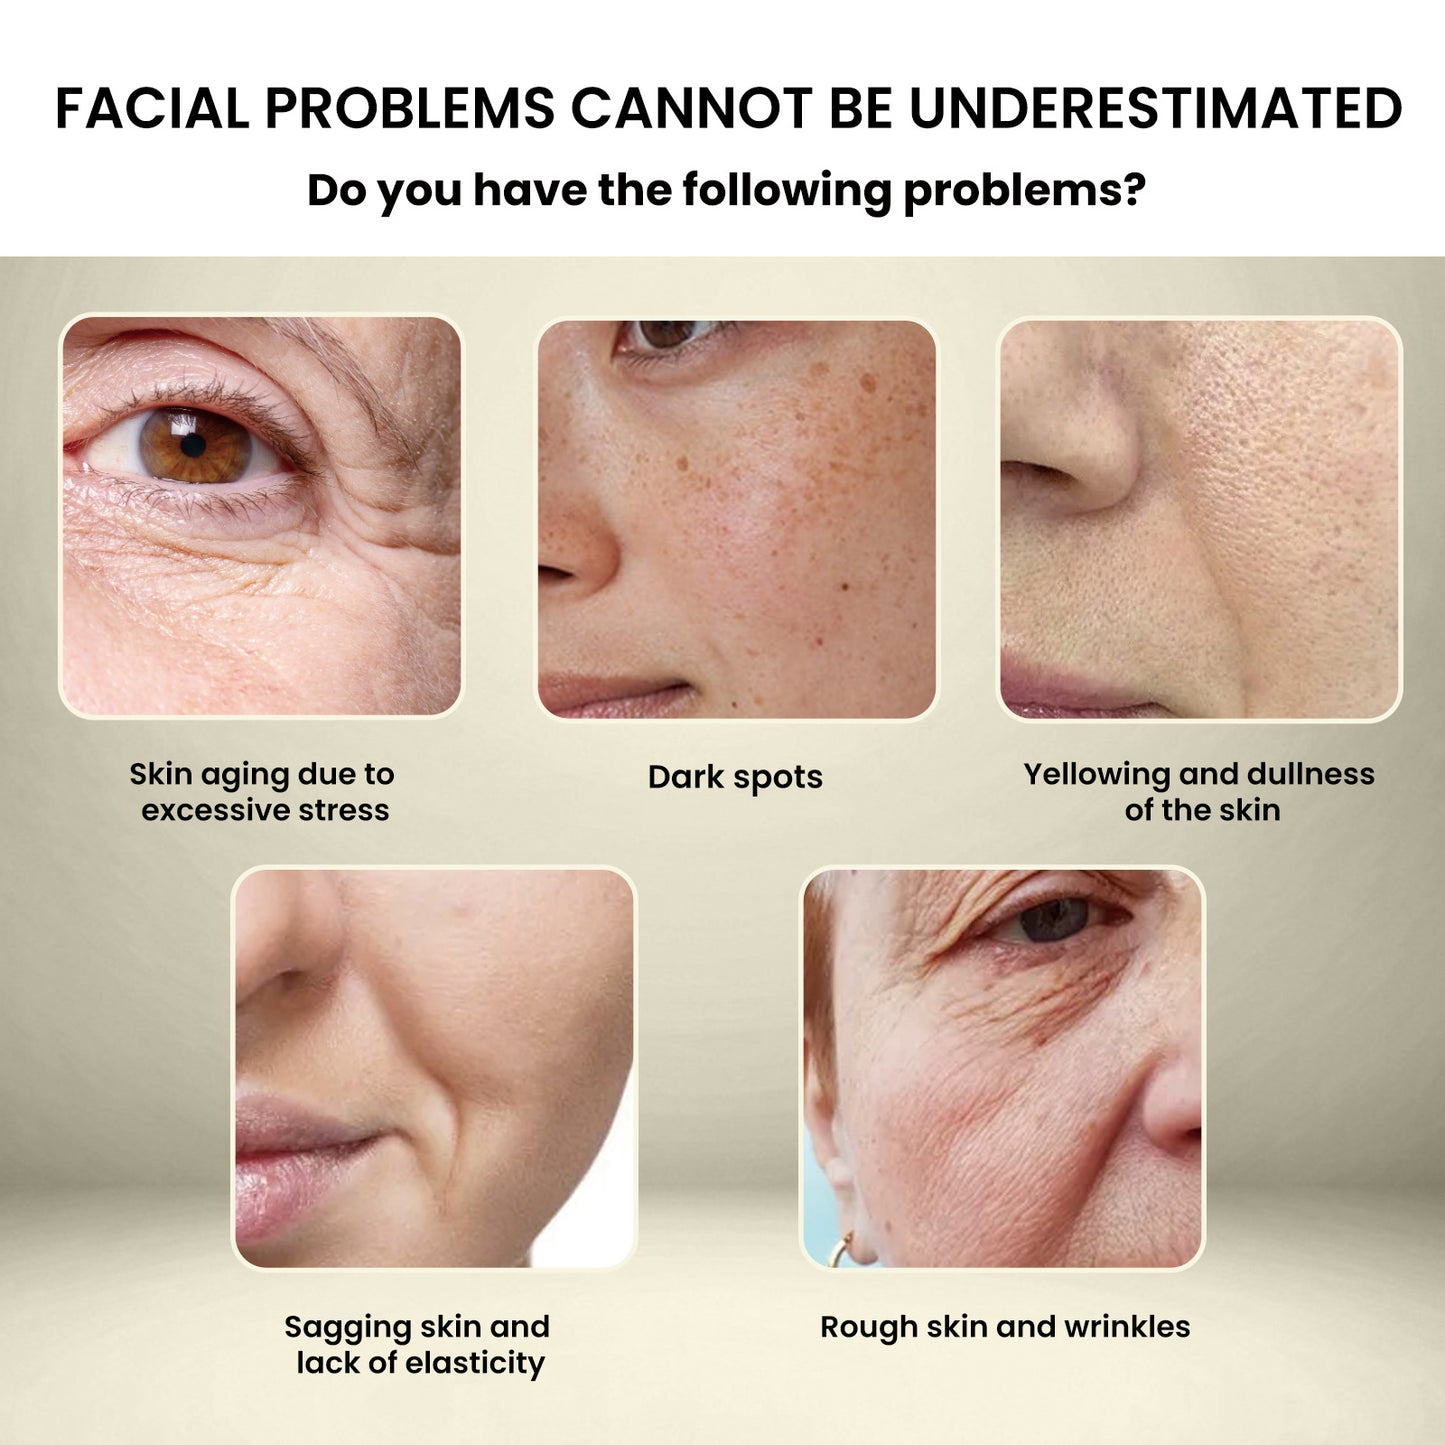 EELHOE Collagen Anti Aging Serum Remove Wrinkles Eye Lines Pores Refining Dark Spots Corrector Whitening Firming Facial Essential Oil(30ml)